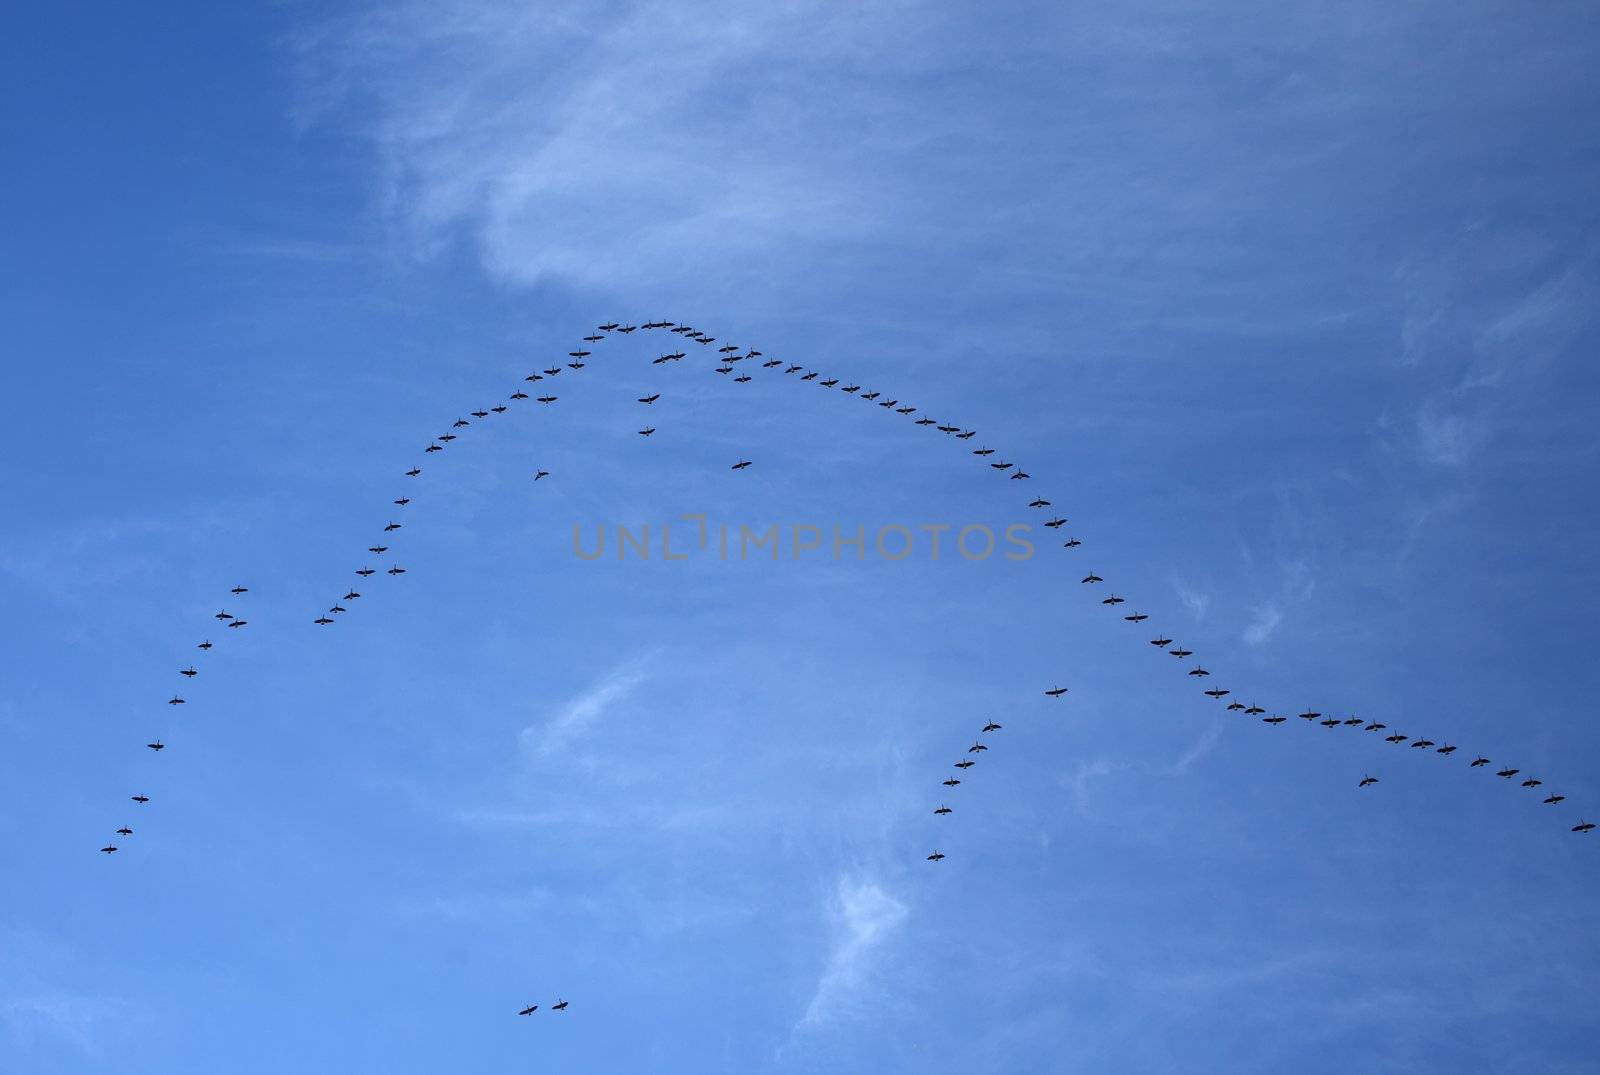 Flock of birds in the blue sky (wild geese).